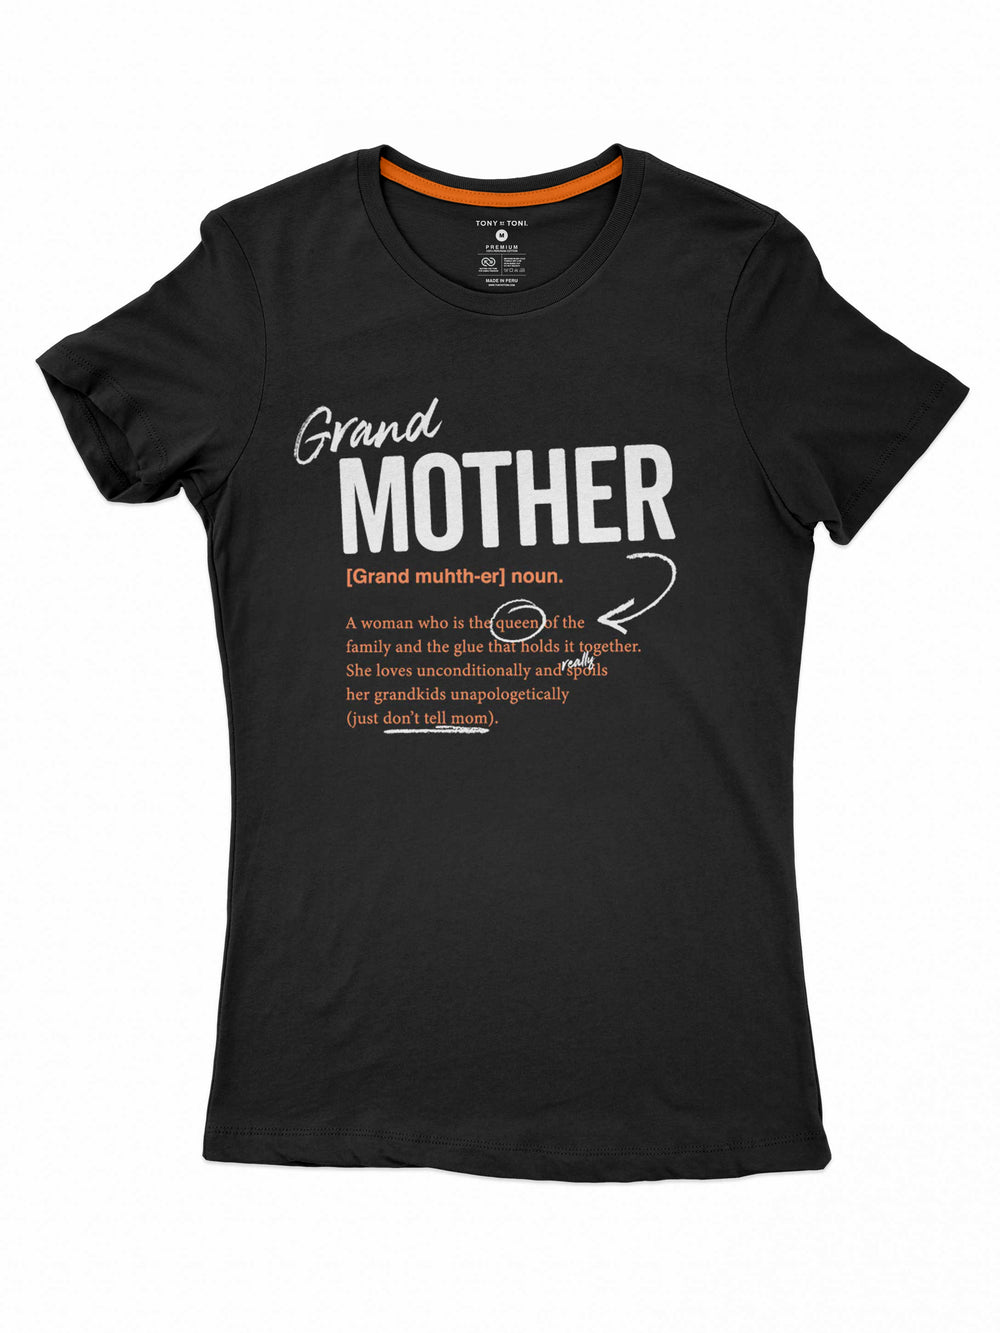 Grandmother logo 2.0 matching family t-shirt